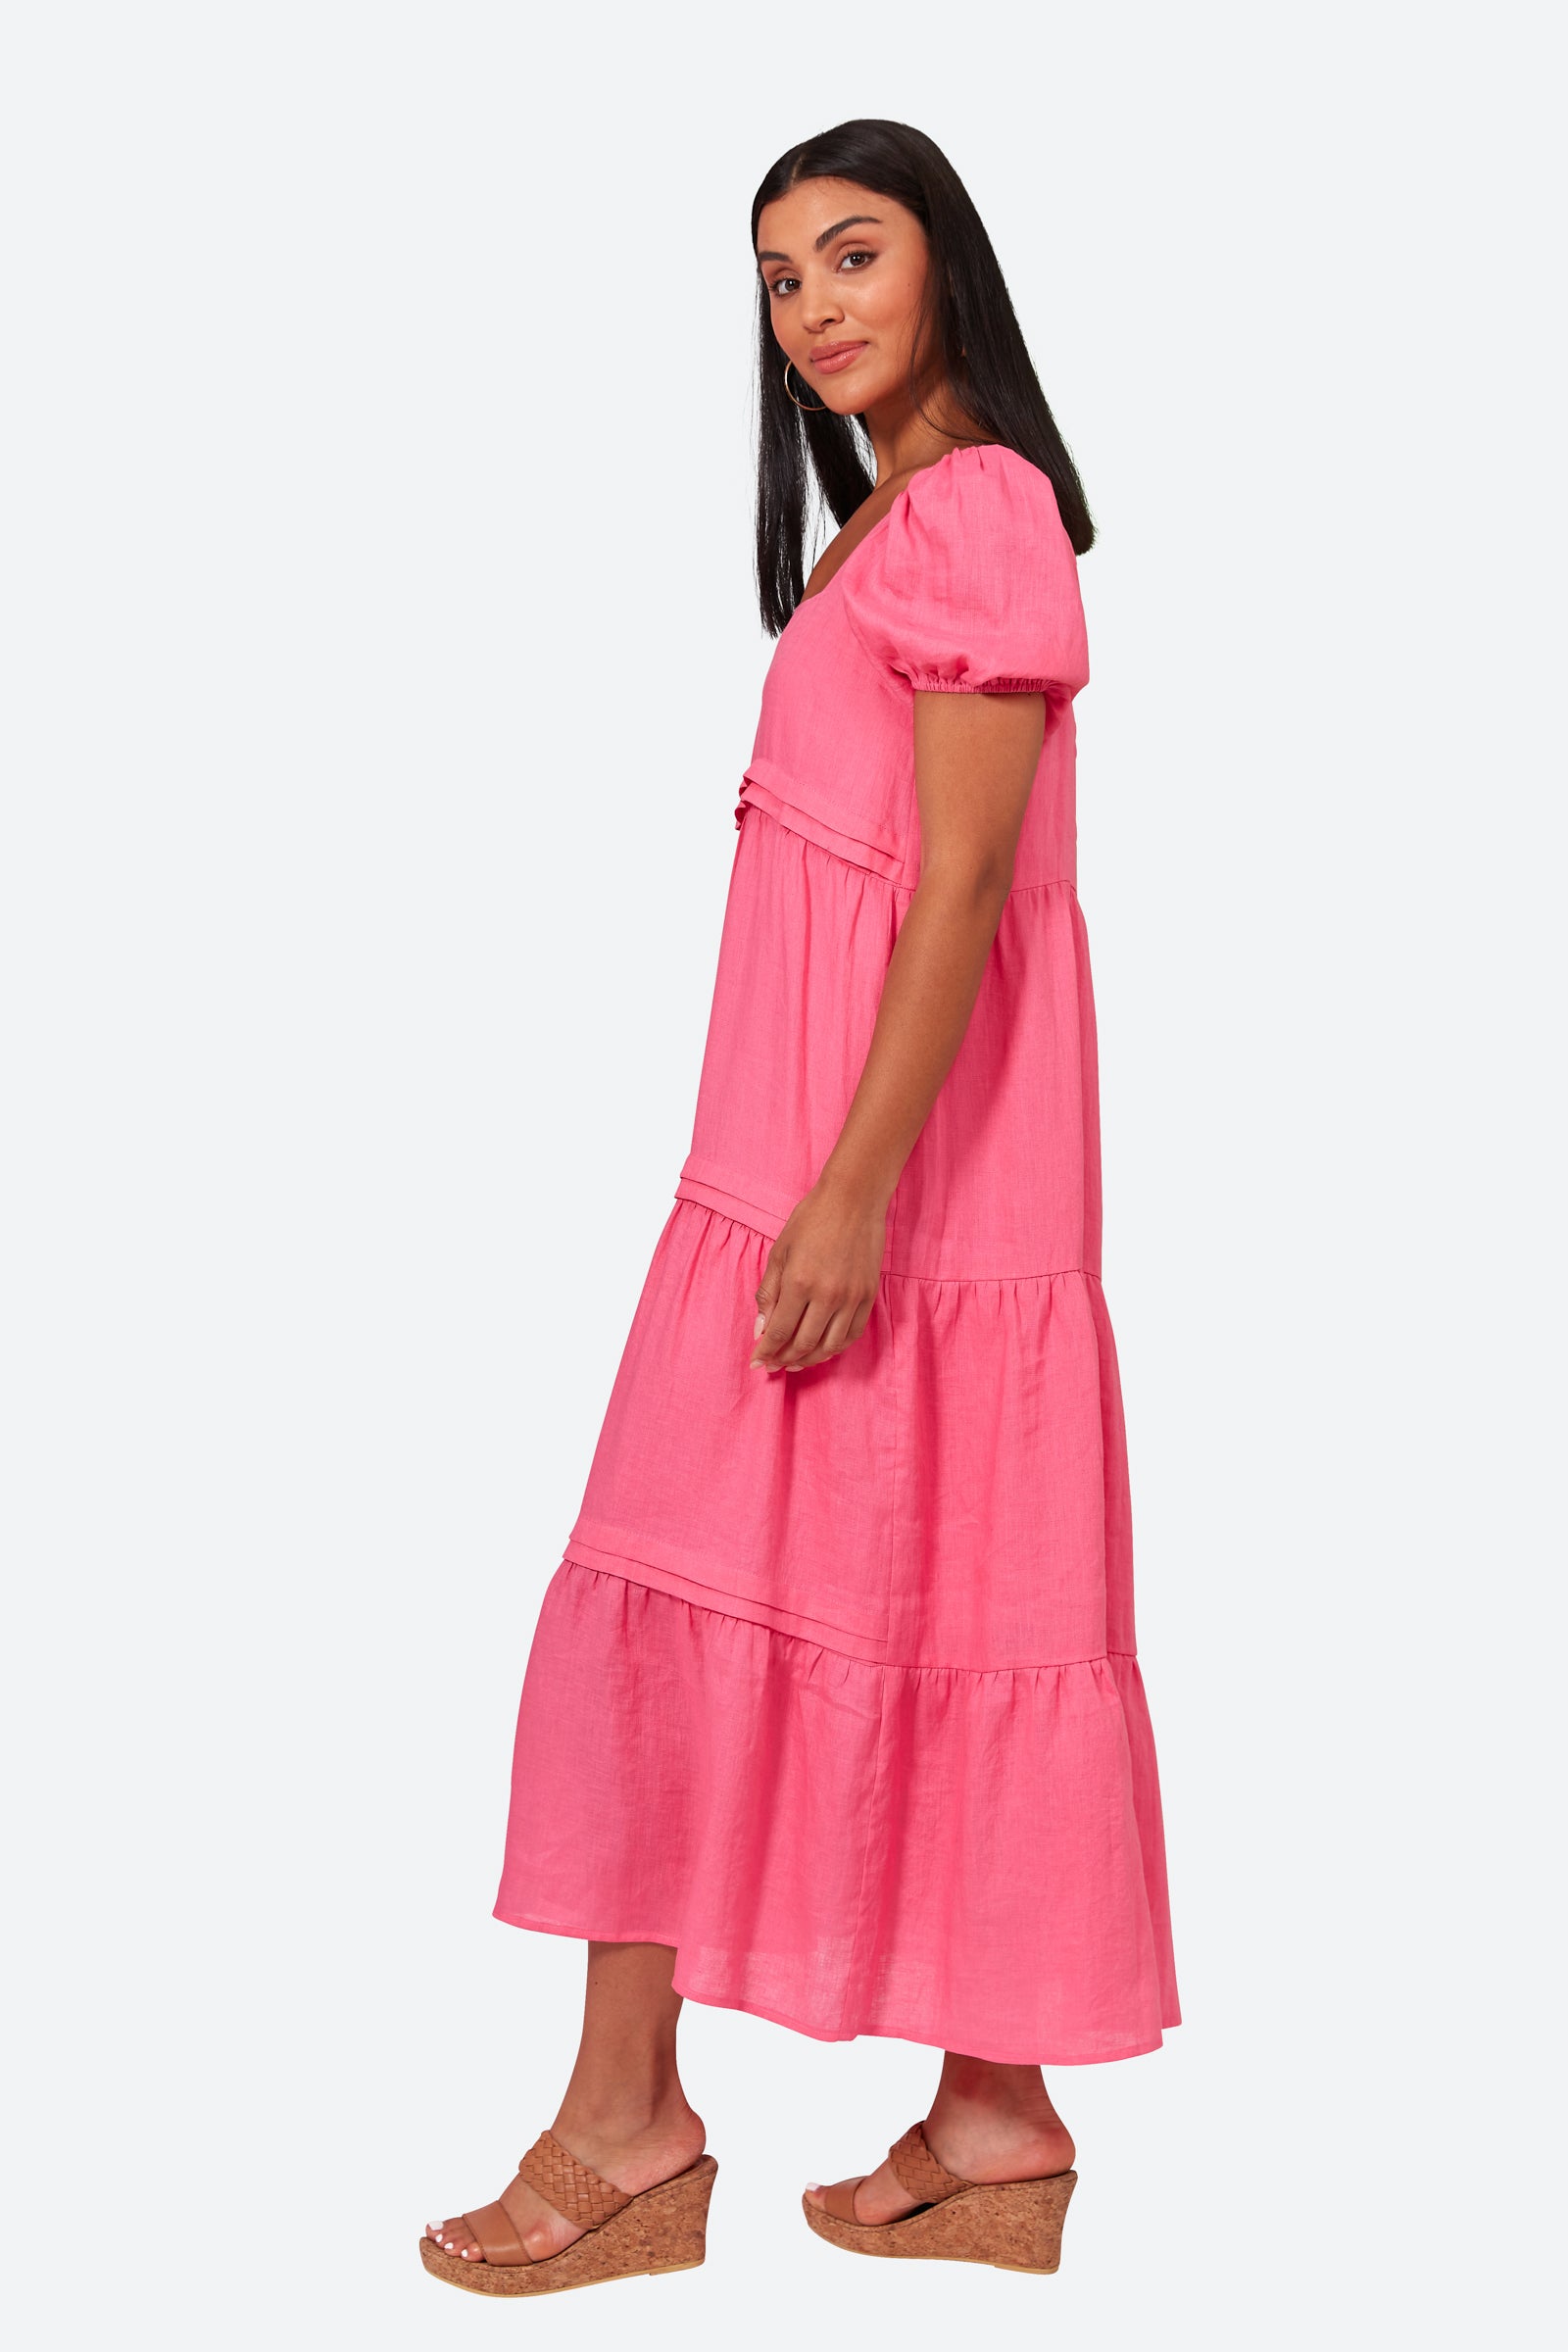 La Vie Pintuck Maxi - Candy - eb&ive Clothing - Dress Maxi Linen